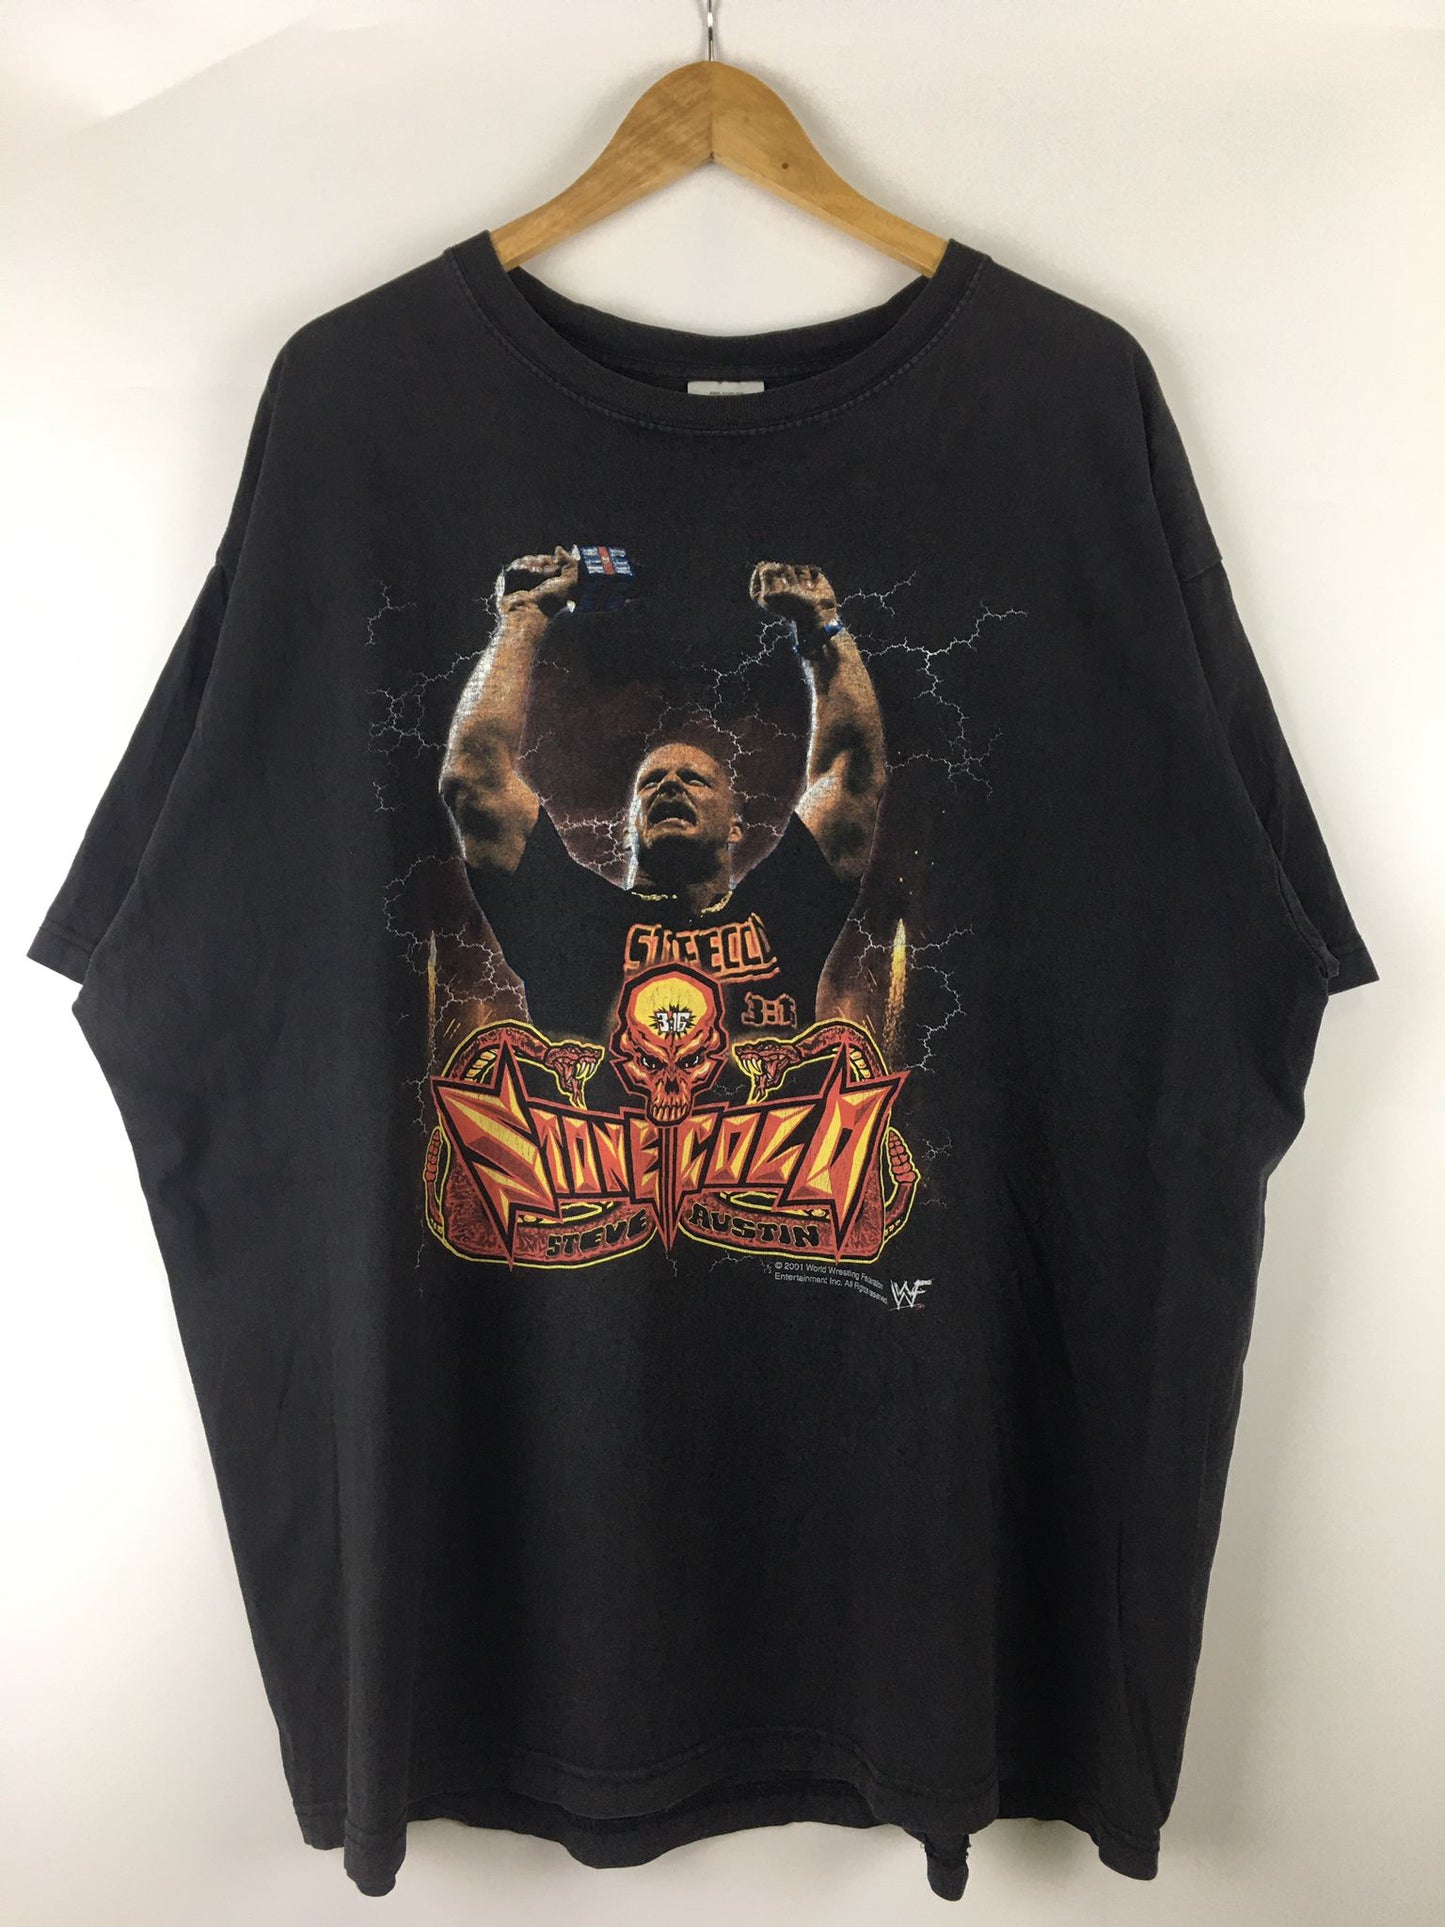 Vintage Stone Cold Steve Austin WWF 2001 T-shirt